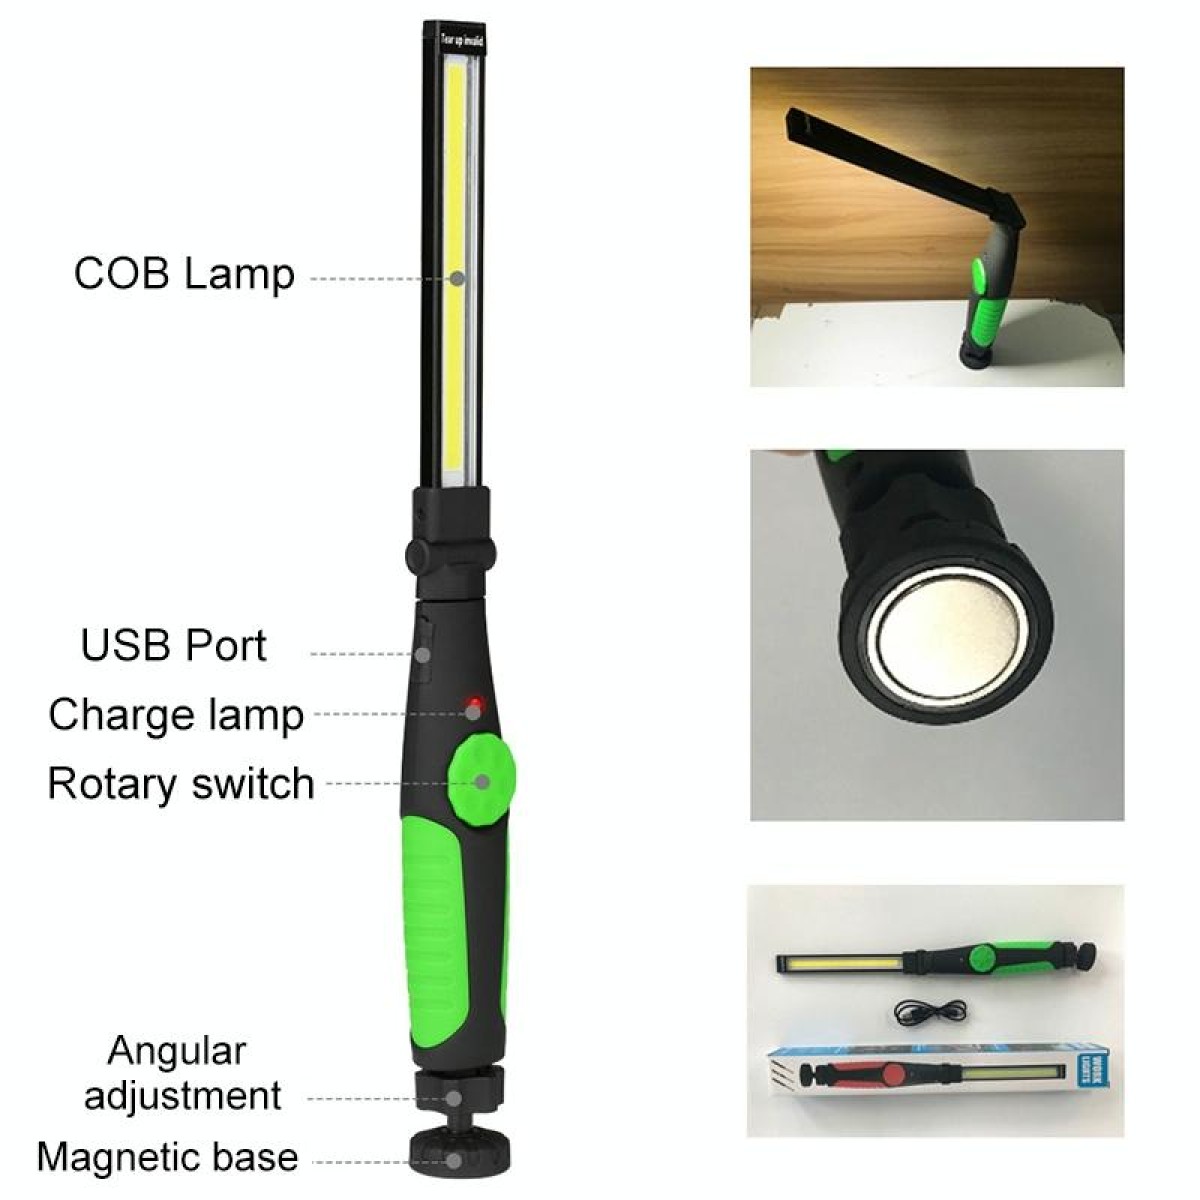 Car Home Car Work Maintenance Lamp Inspection Maintenance Light Emergency COB Charging Lamp(Green)